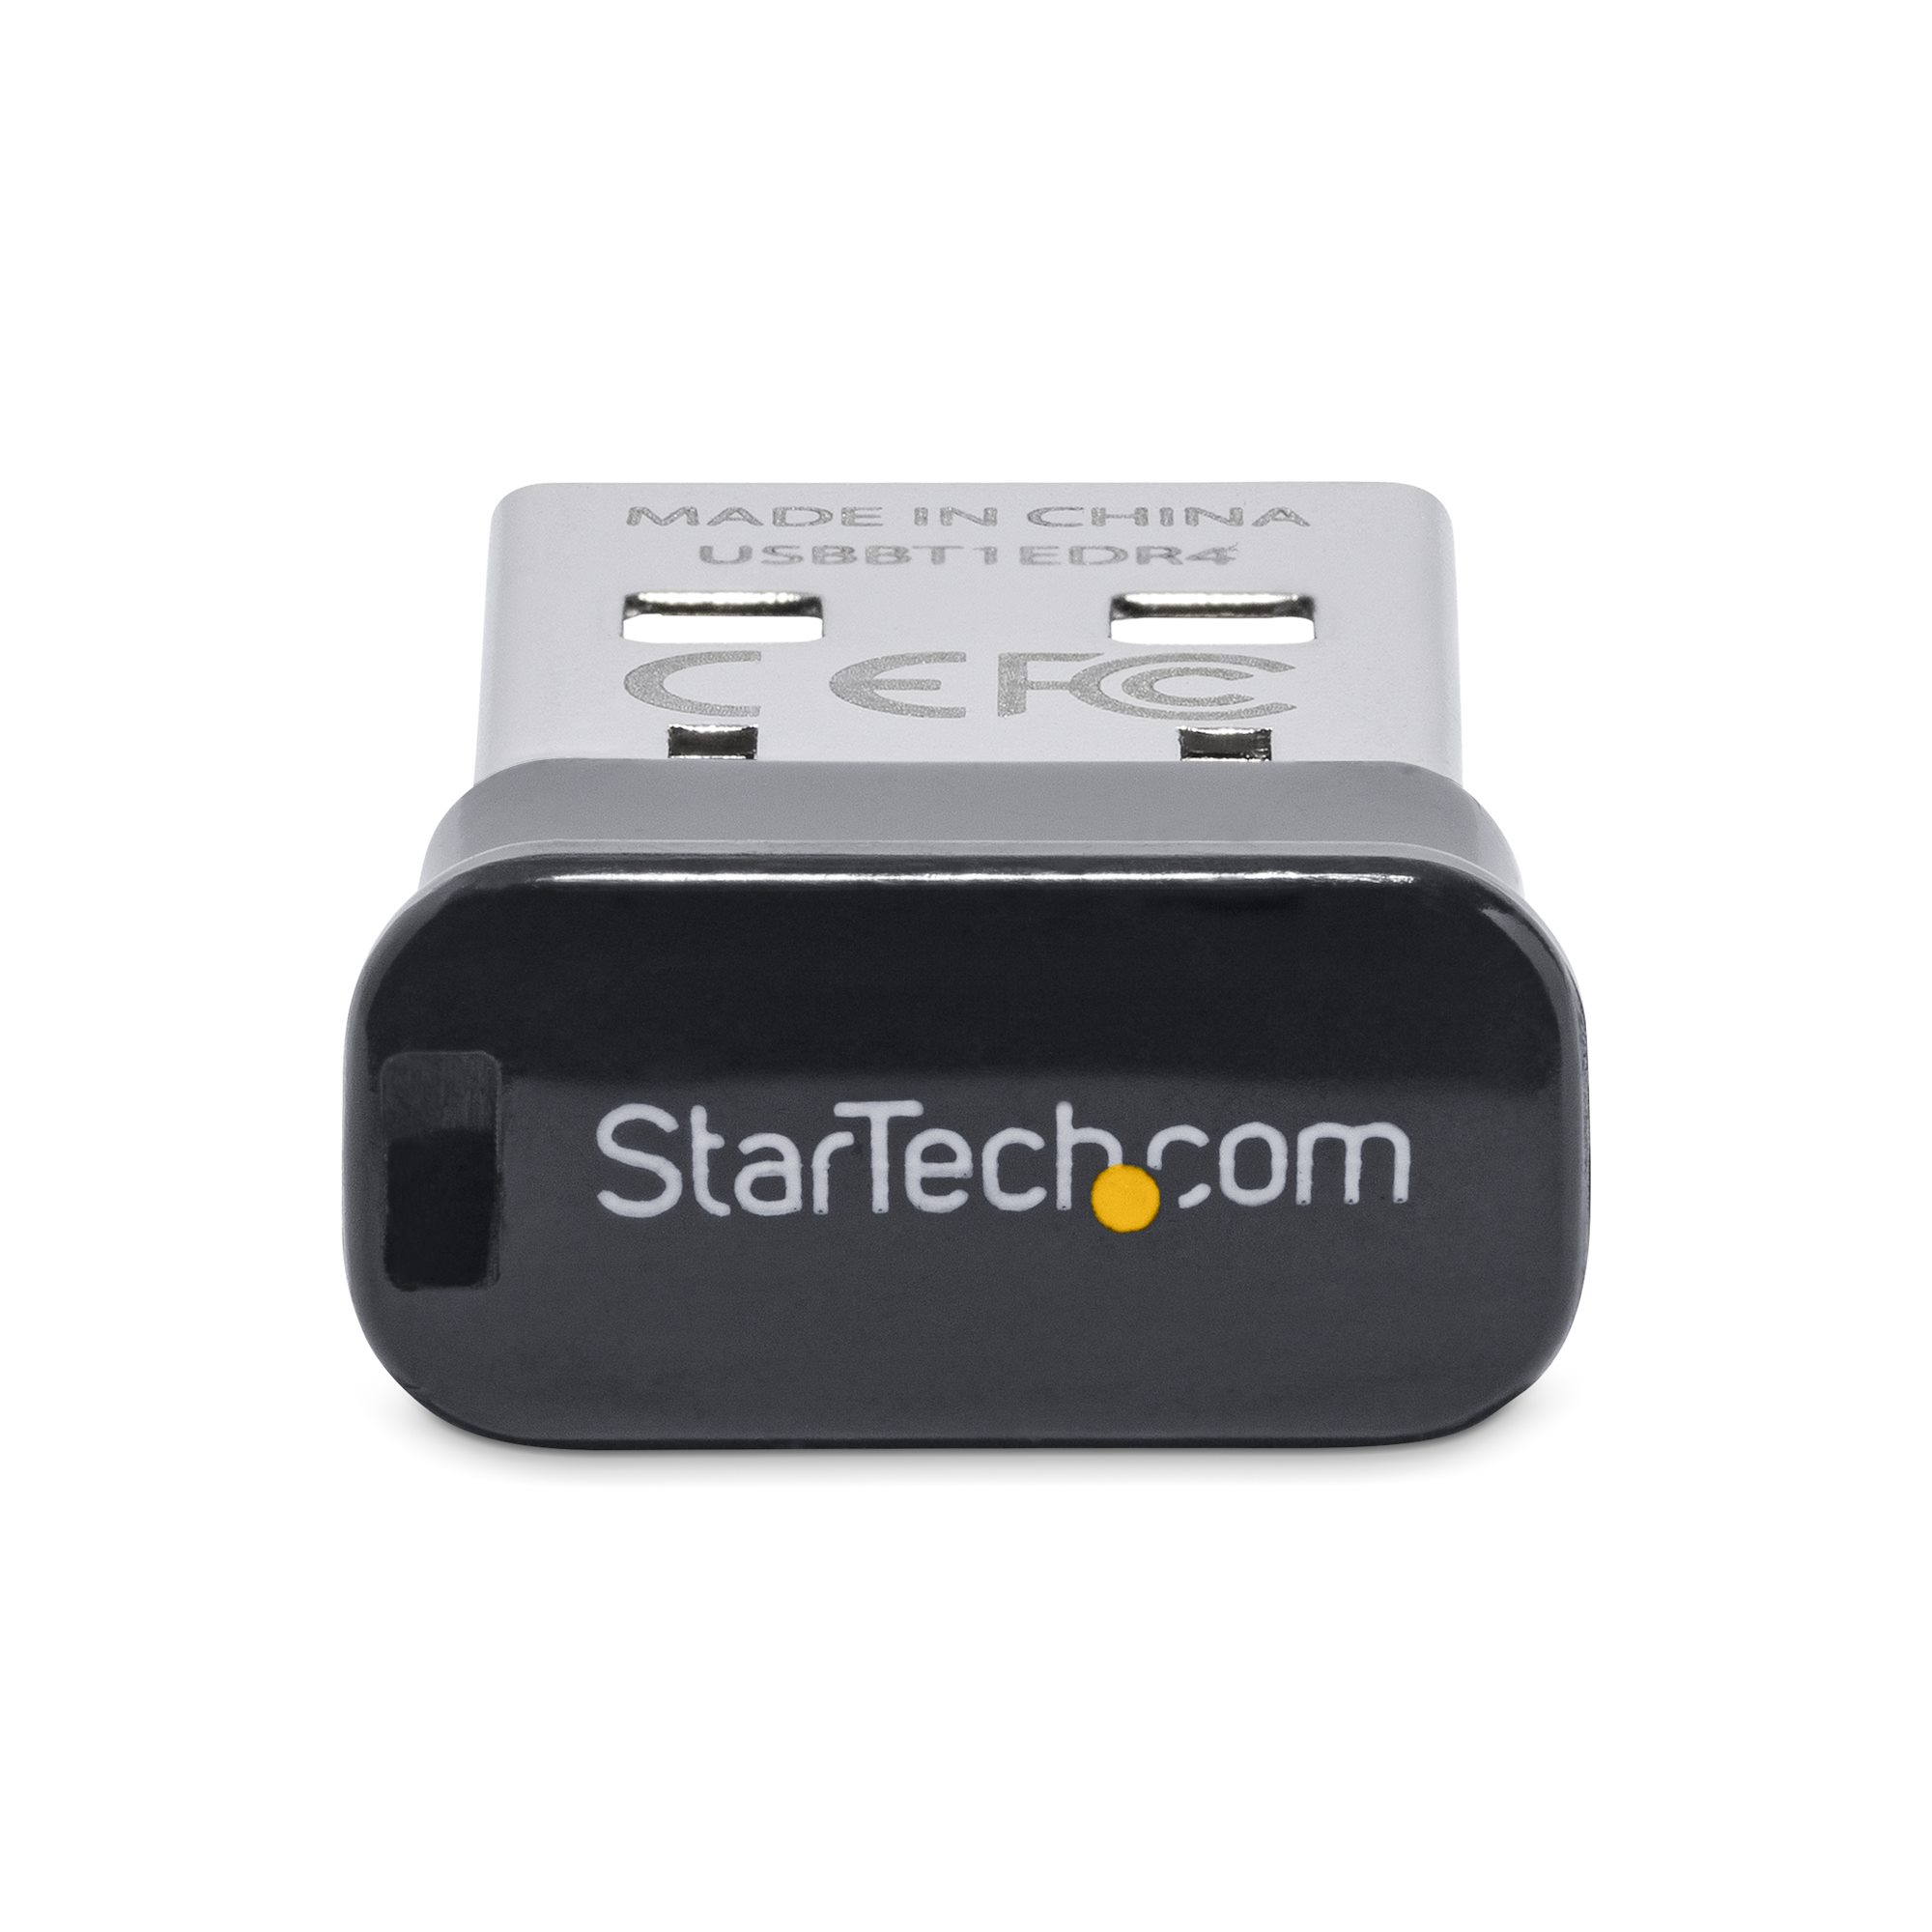 Mini USB Bluetooth 4.0 Dongle - 50m - Bluetooth & Telecom Adapters, Networking IO Products